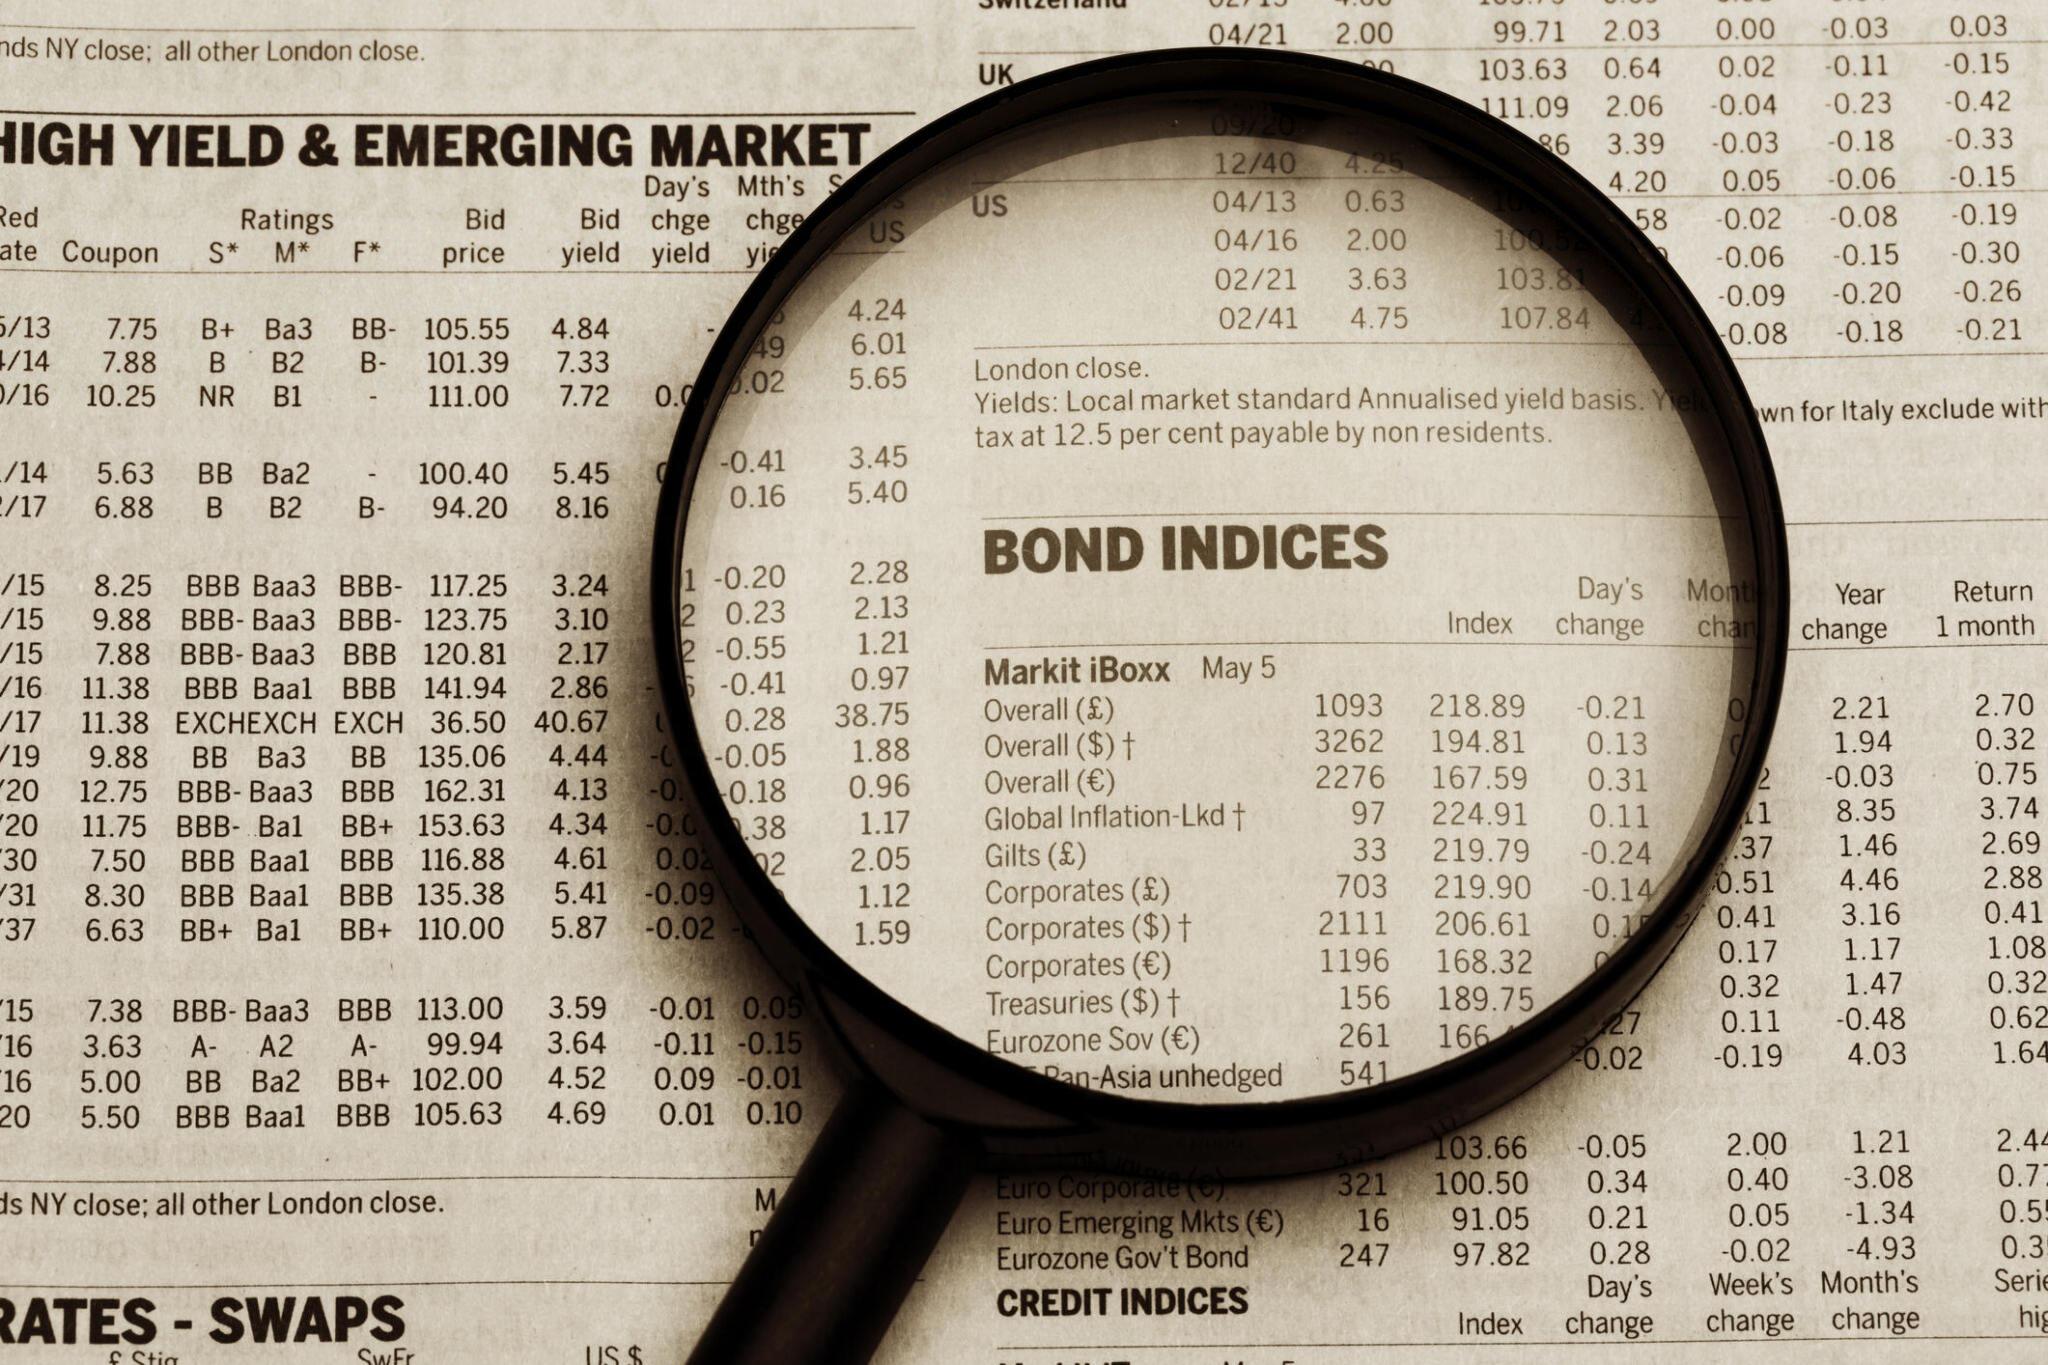 Bond Trading Indices